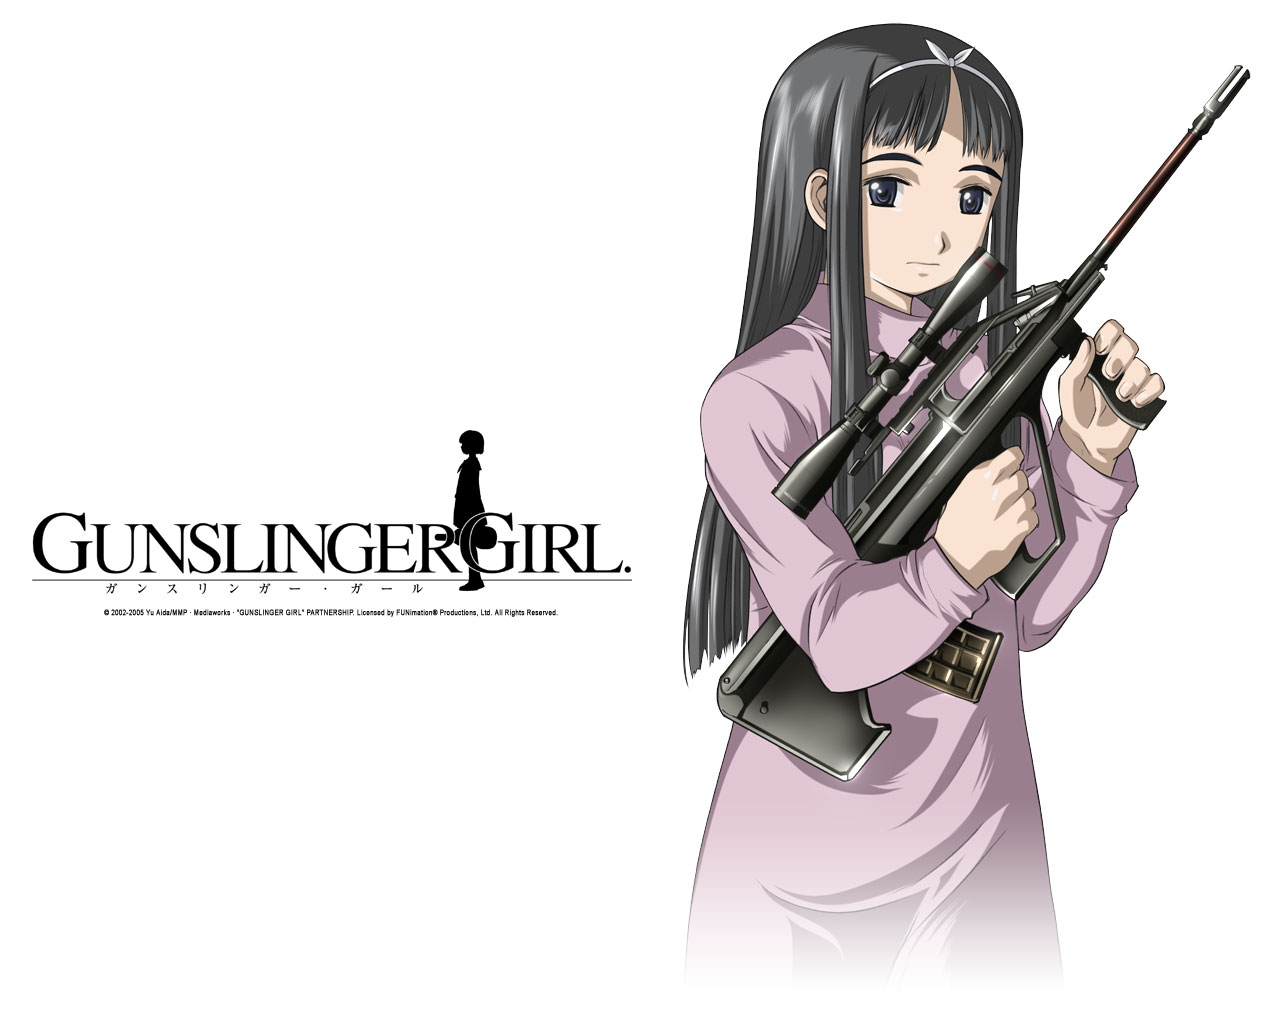 1484124 descargar imagen animado, gunslinger girl: fondos de pantalla y protectores de pantalla gratis